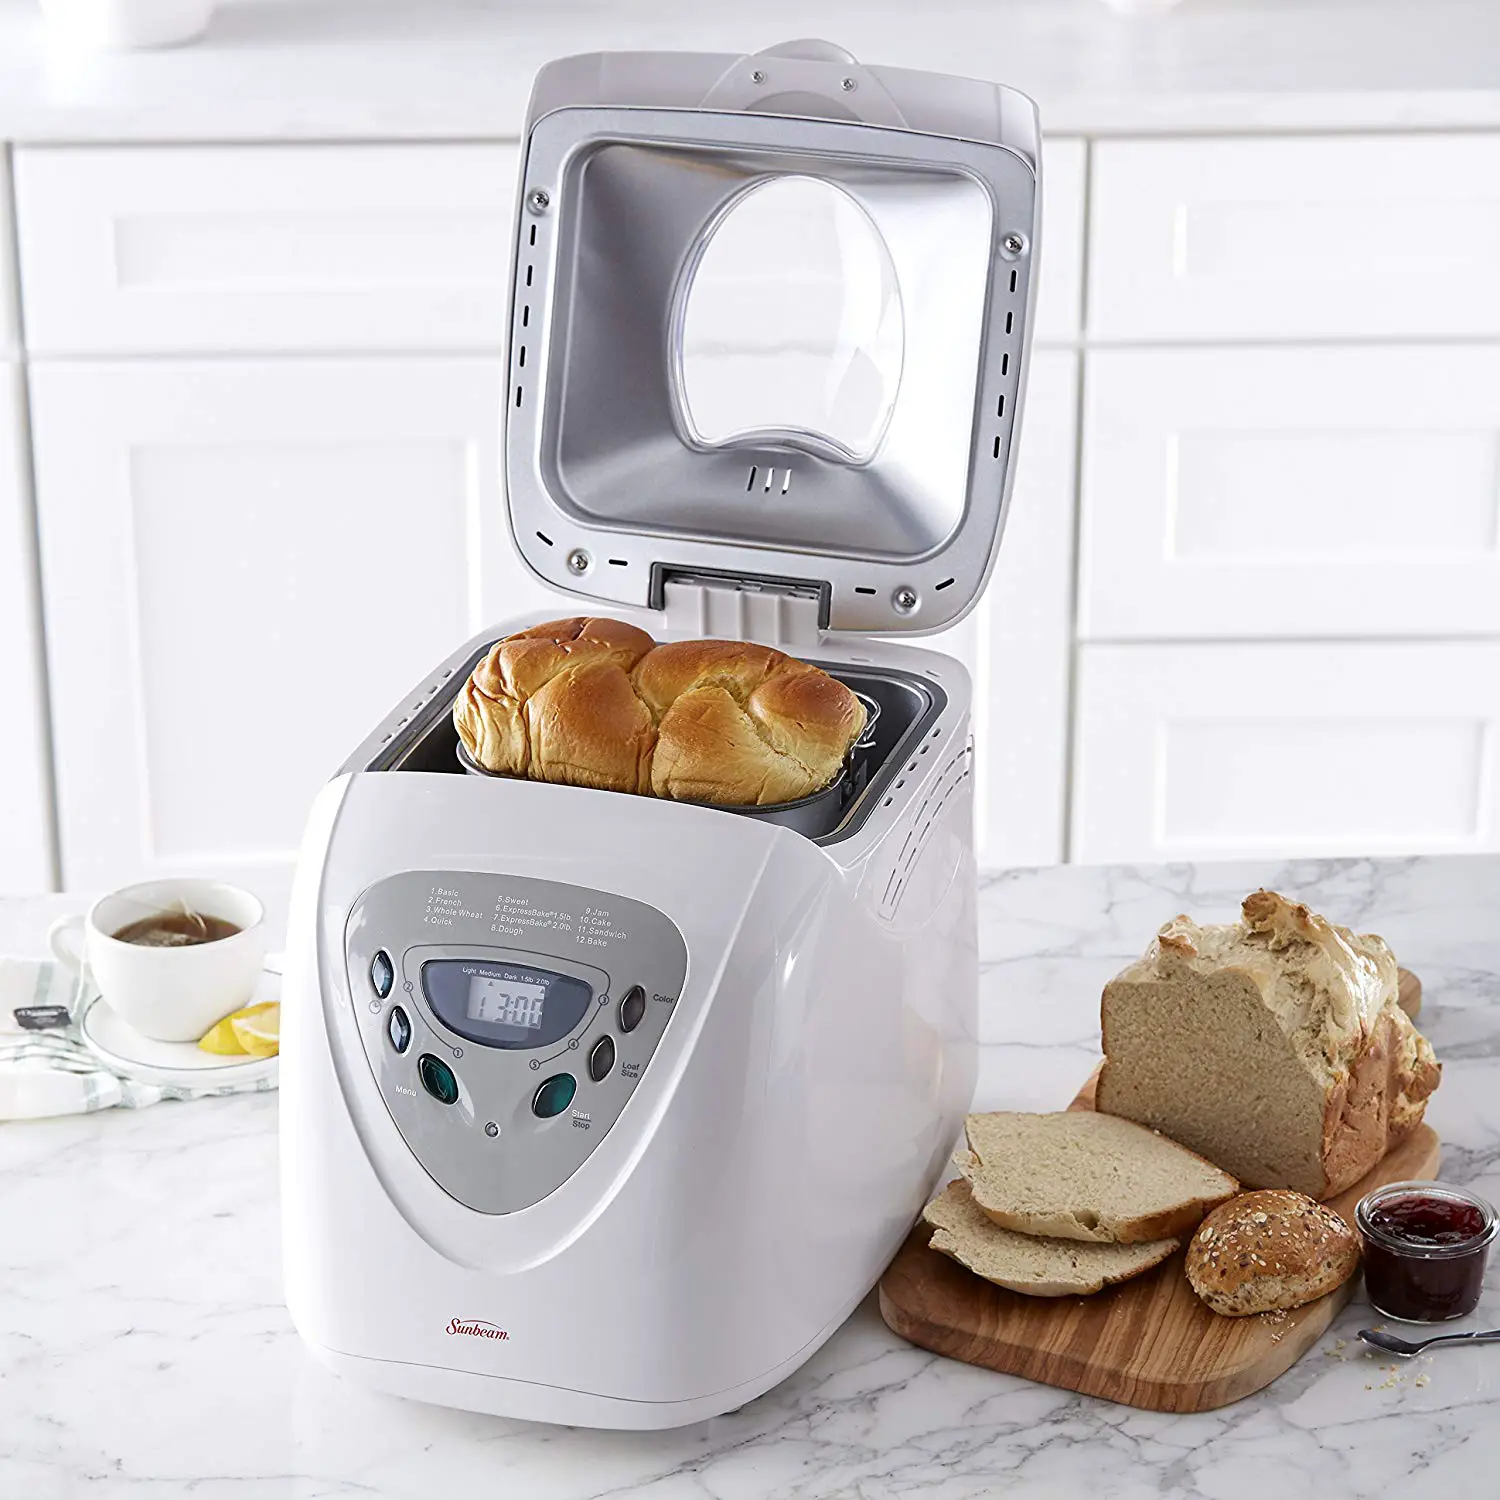 How To Make Fluffy Bread In Bread Machine